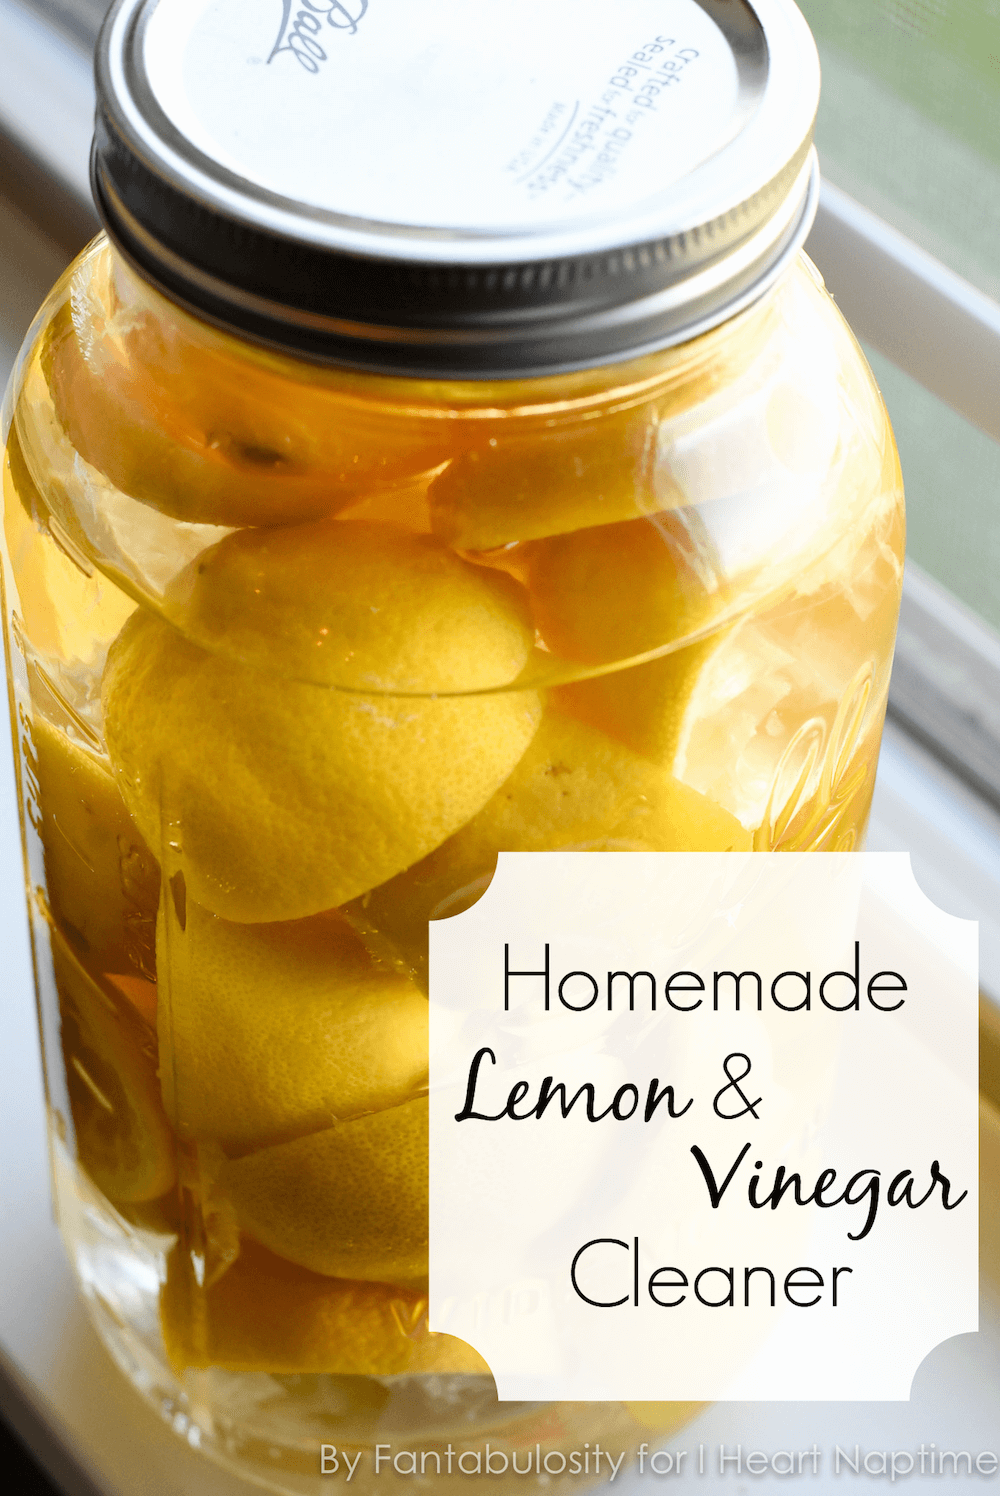 Lemon and vinegar cleaner in a glass mason jar.